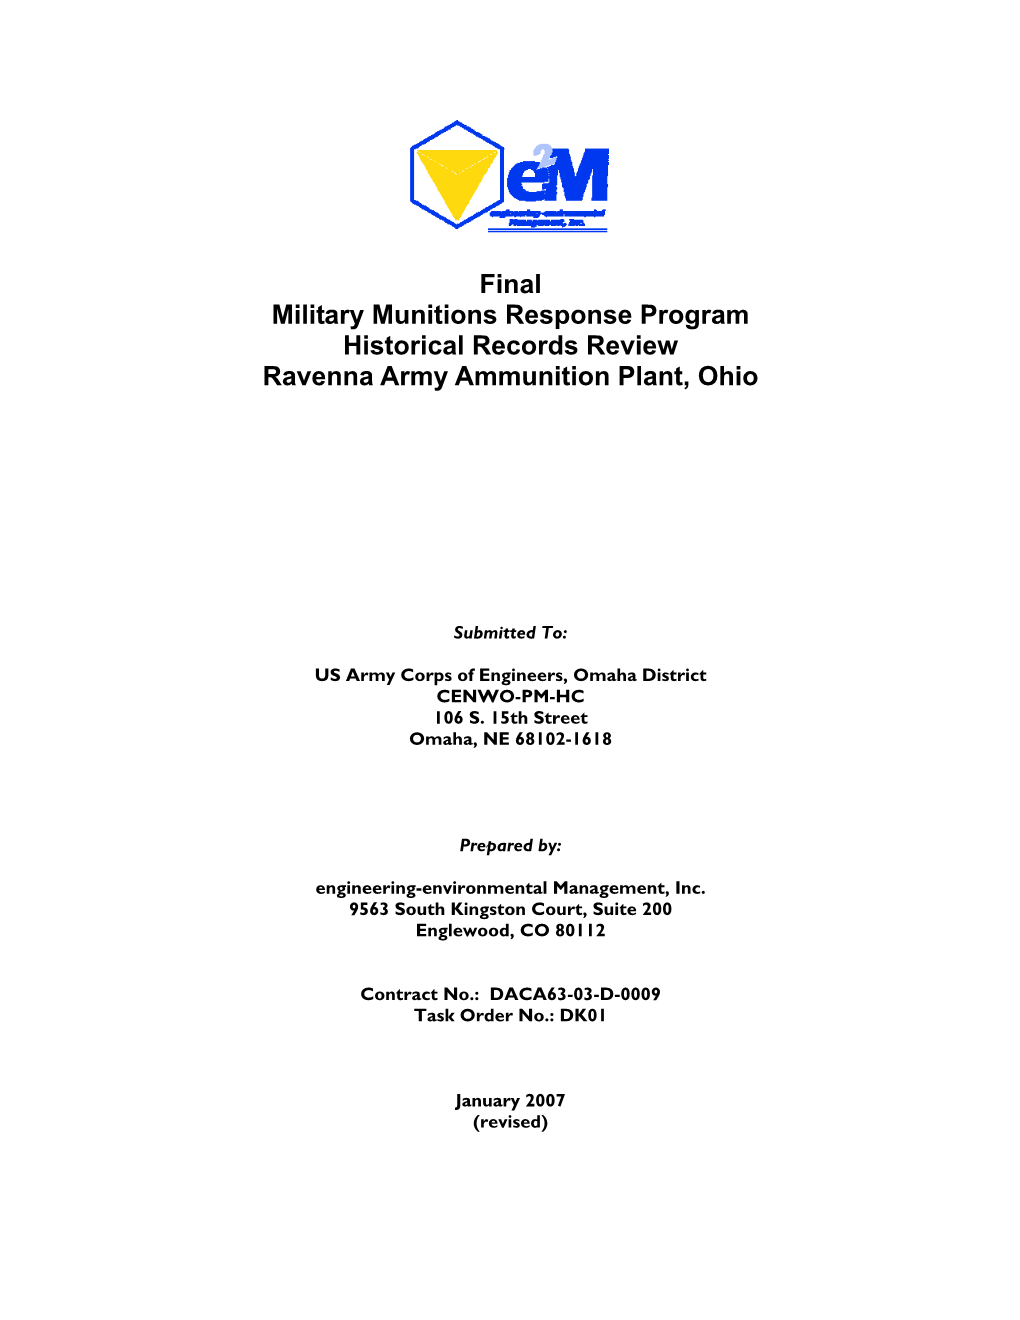 Final Military Munitions Response Program Historical Records Review Ravenna Army Ammunition Plant, Ohio